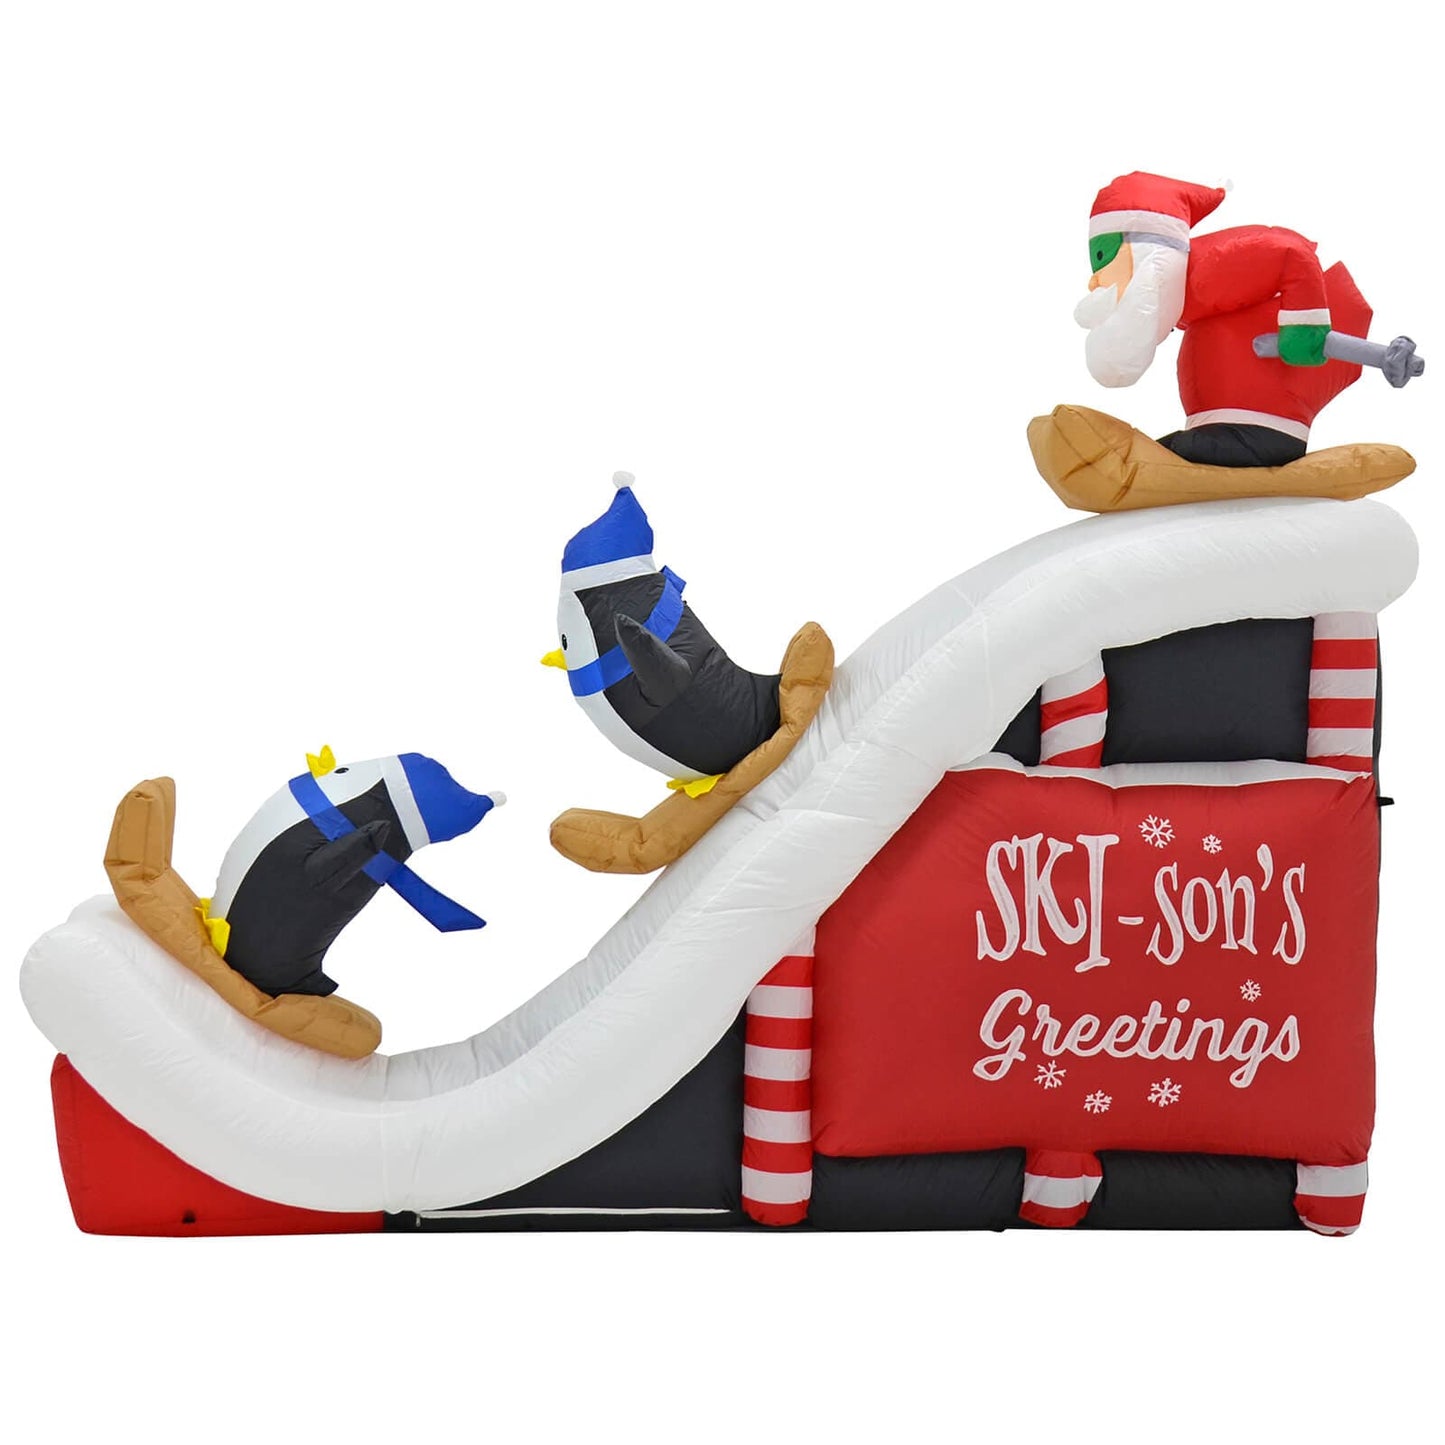 Santa ski jump large inflatable Christmas decoration with Santa and 2 penguins